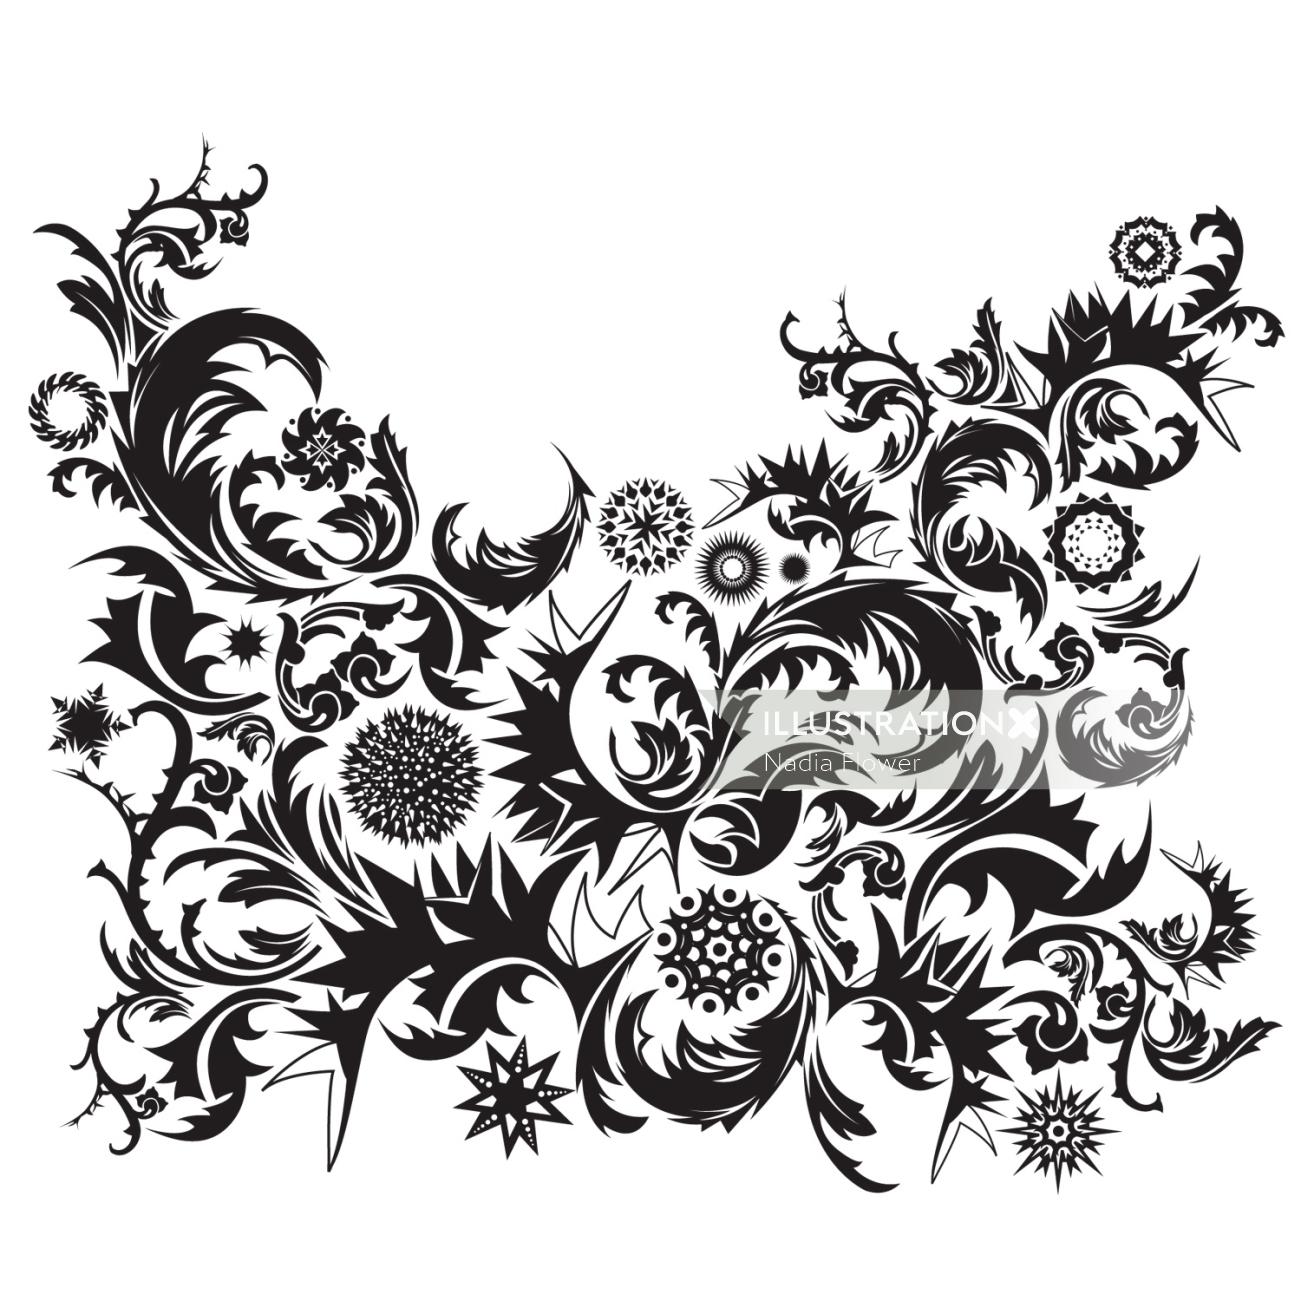 Black & White Decorative illustration
